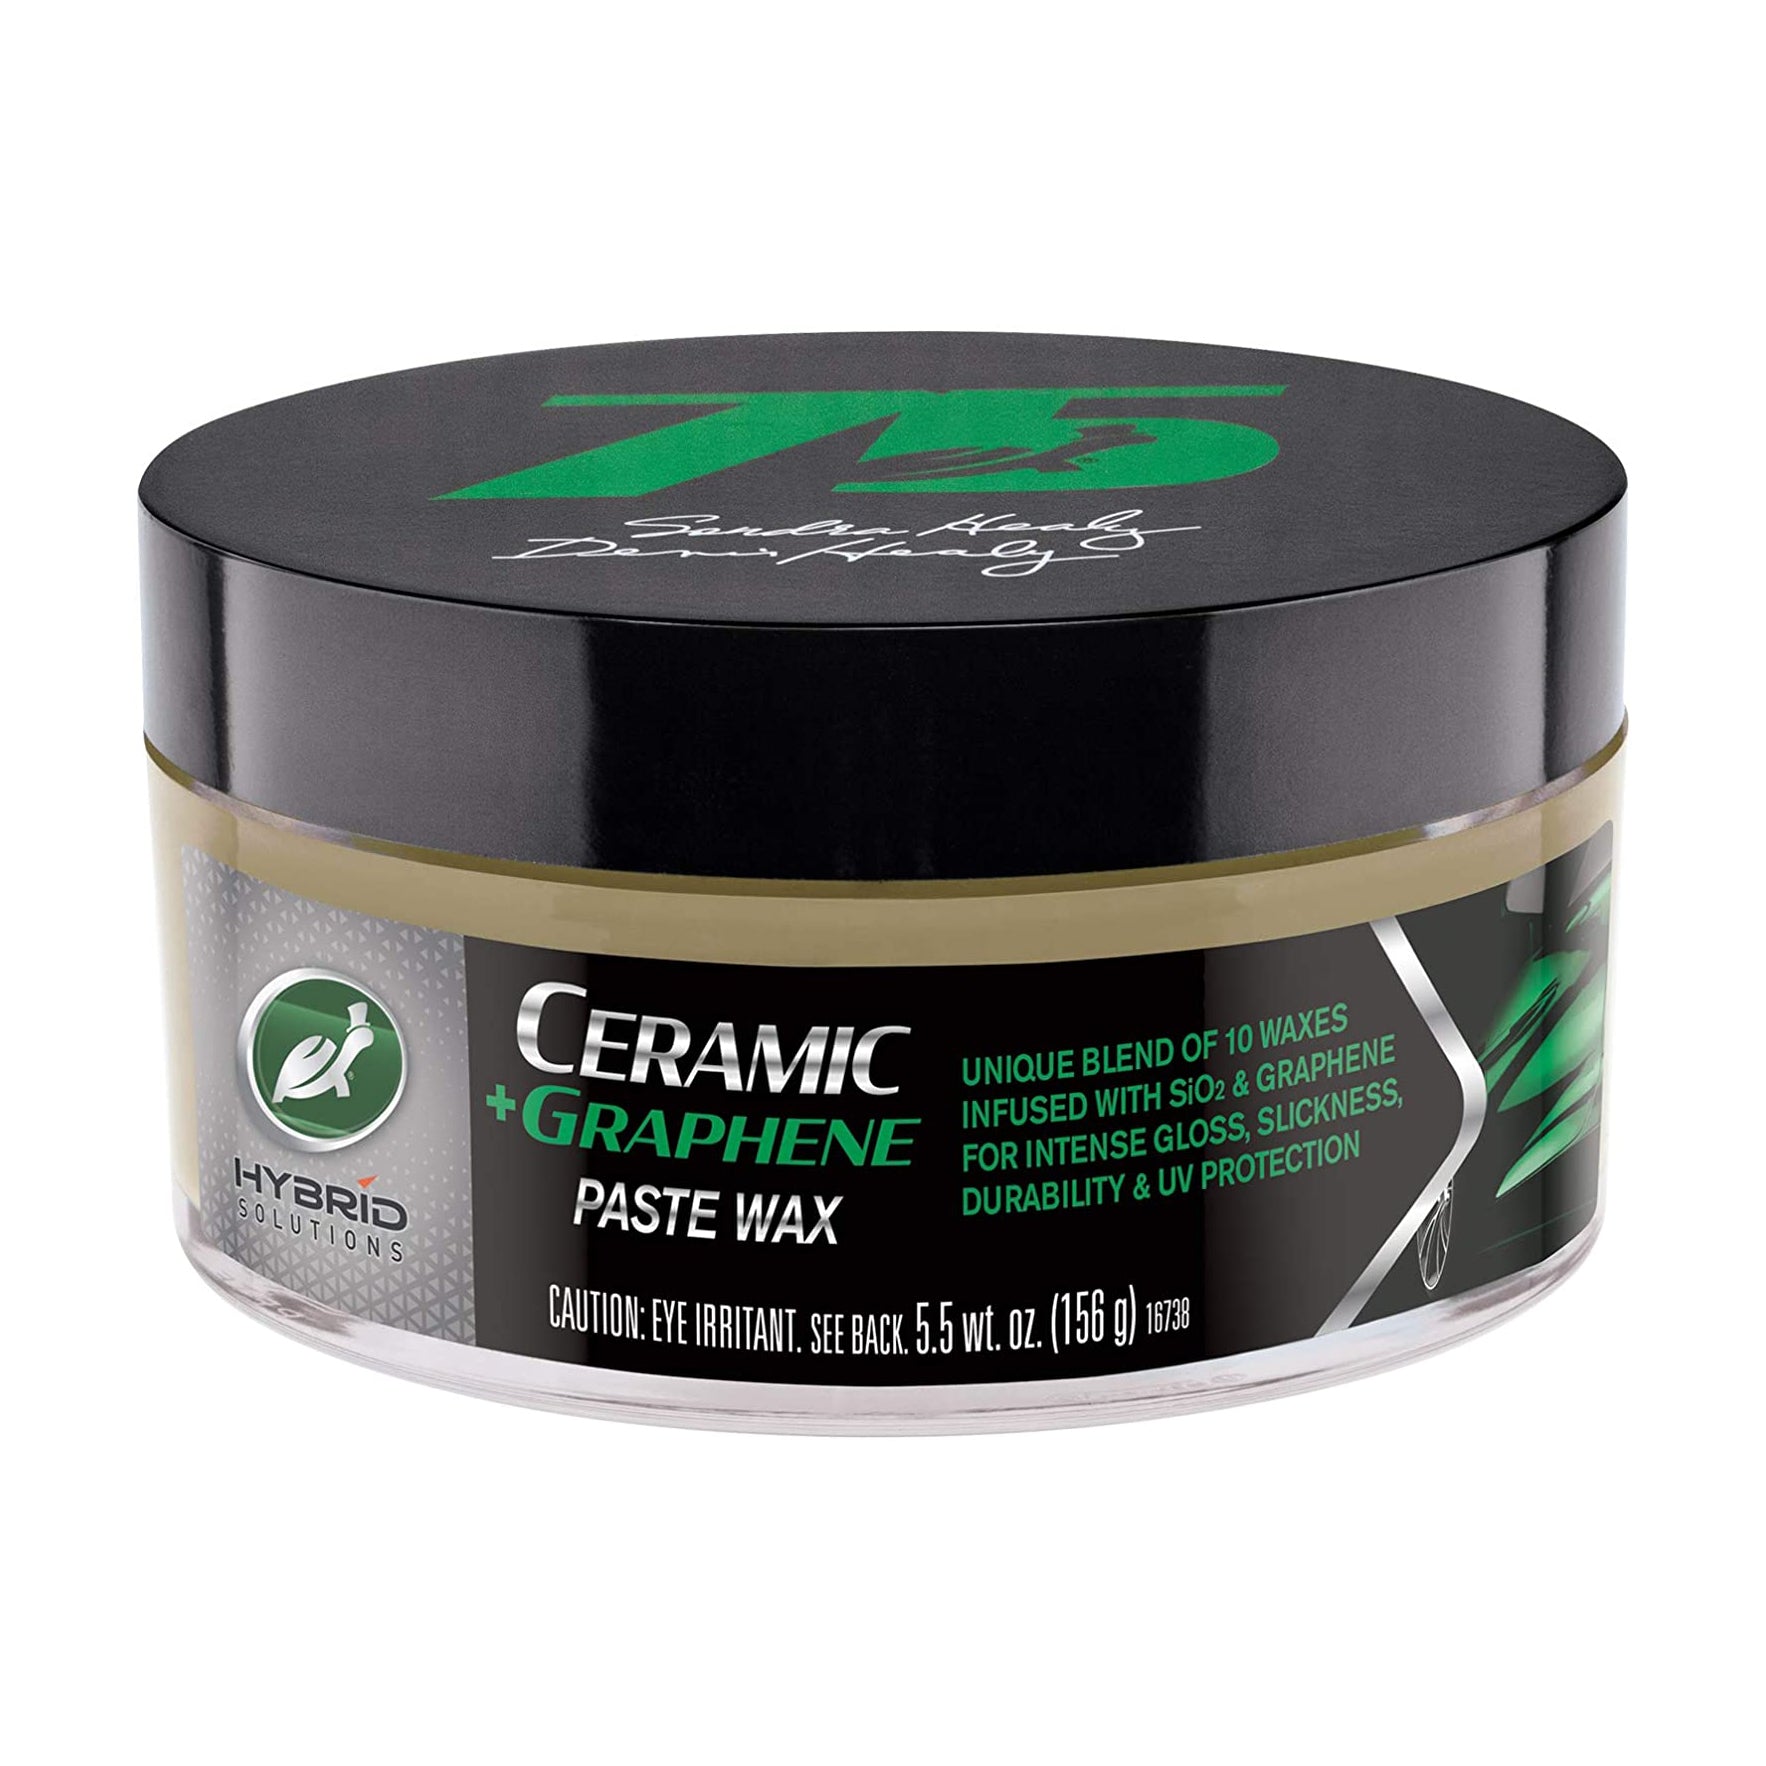 Turtle Wax Hybrid Solutions CERAMIC + GRAPHENE Paste Wax – detaildegree